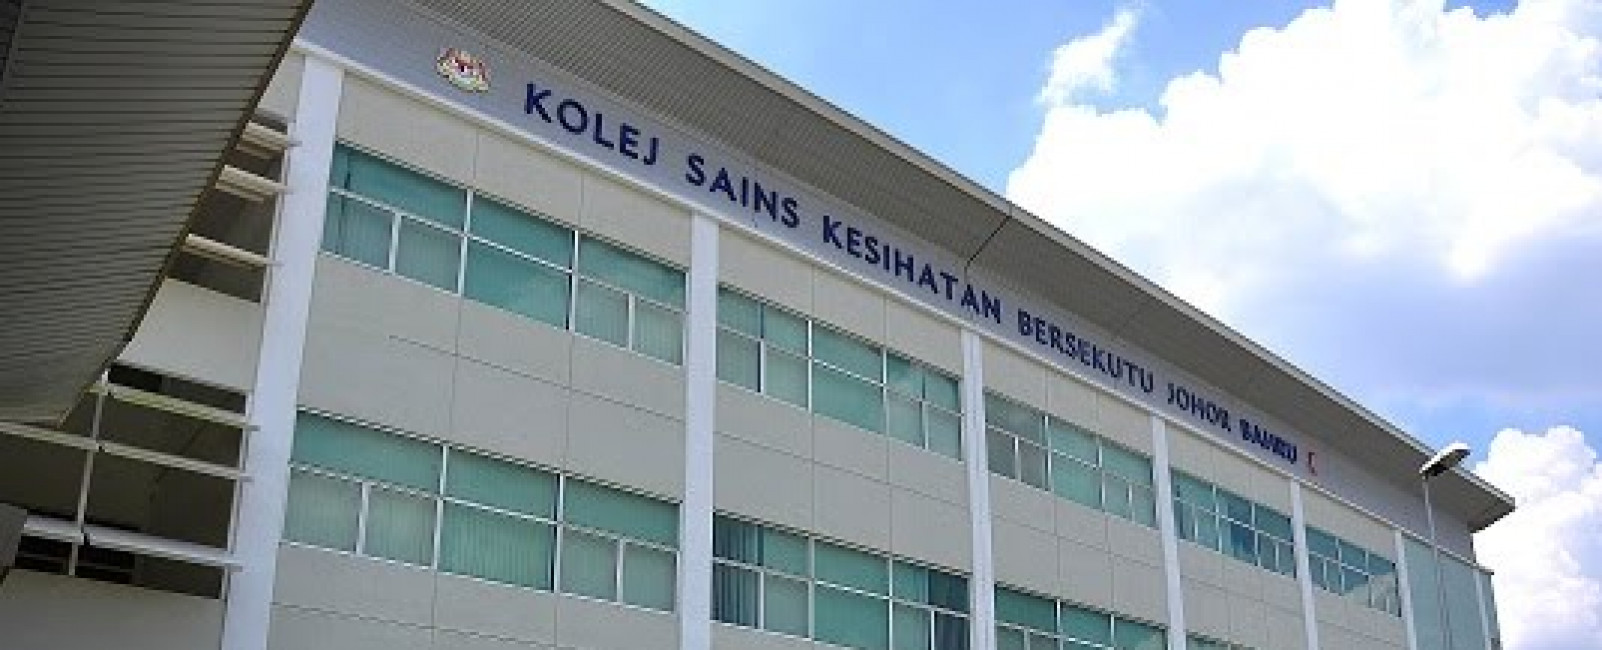 Kolej Sains Kesihatan Bersekutu Johor Bahru | MyCompass